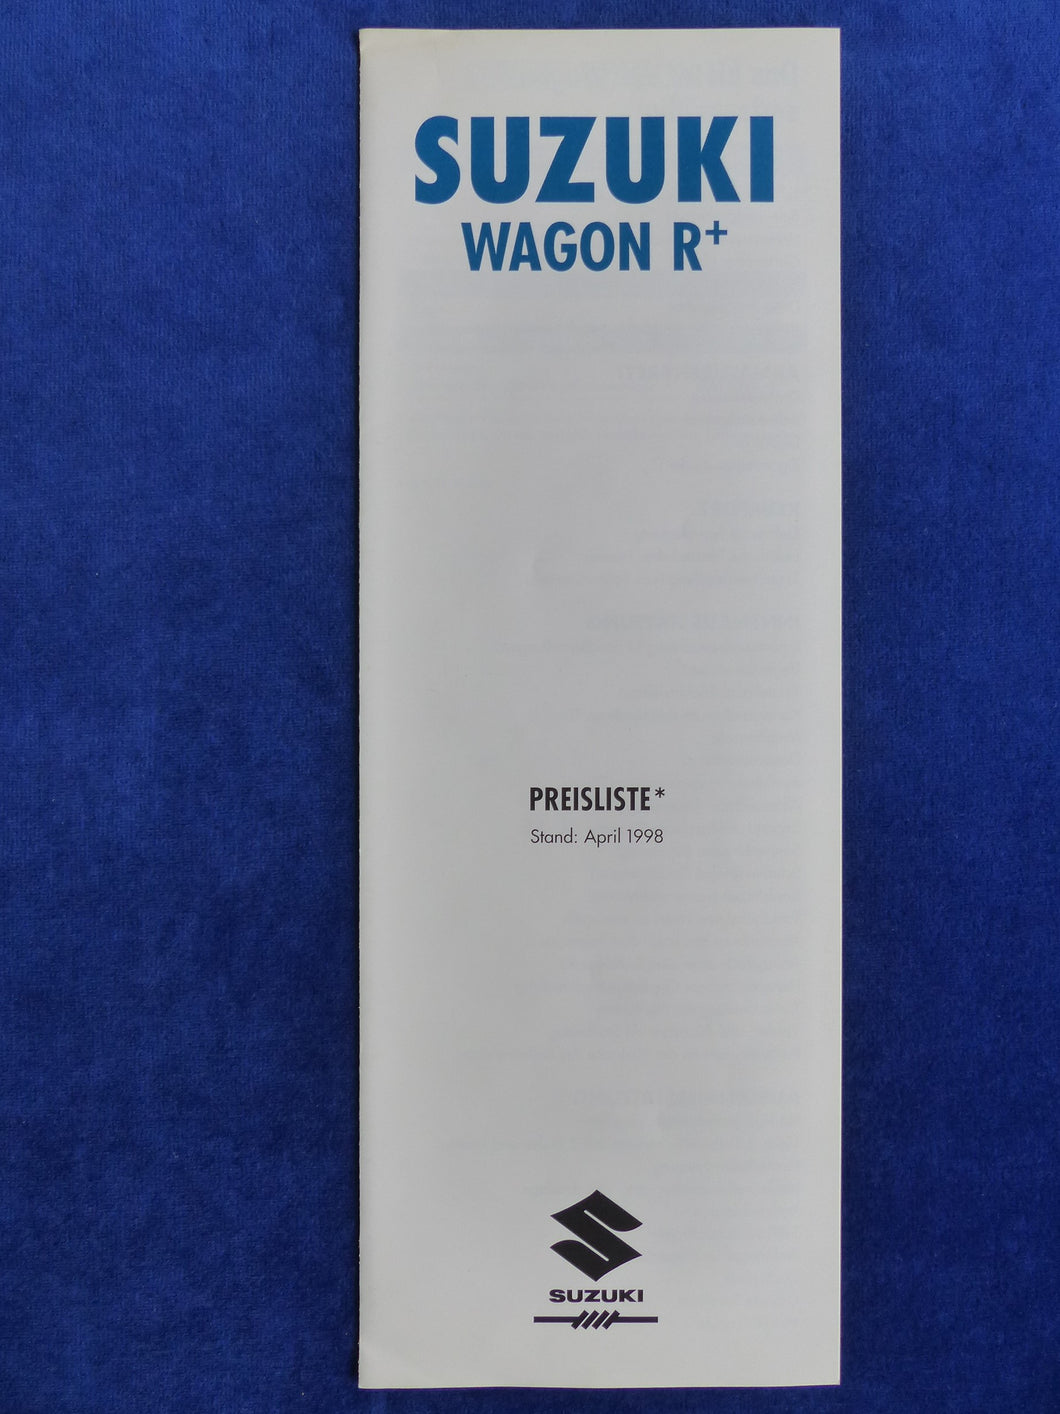 Suzuki Wagon R+ - Preisliste - Prospekt Brochure 04.1998